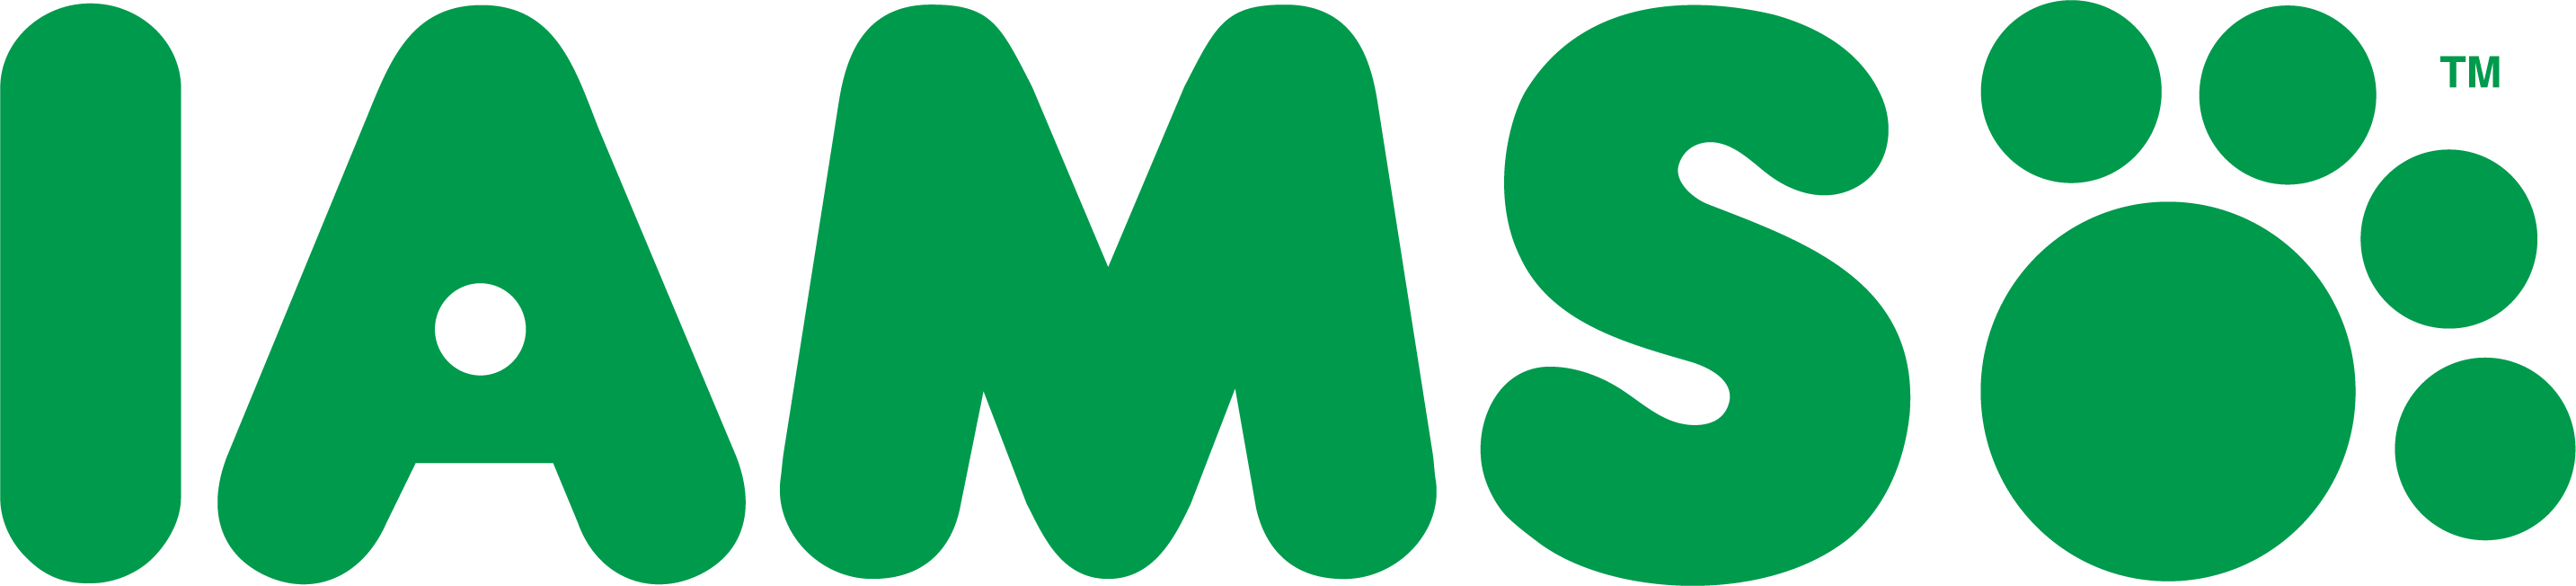 IAMS Brand Logo